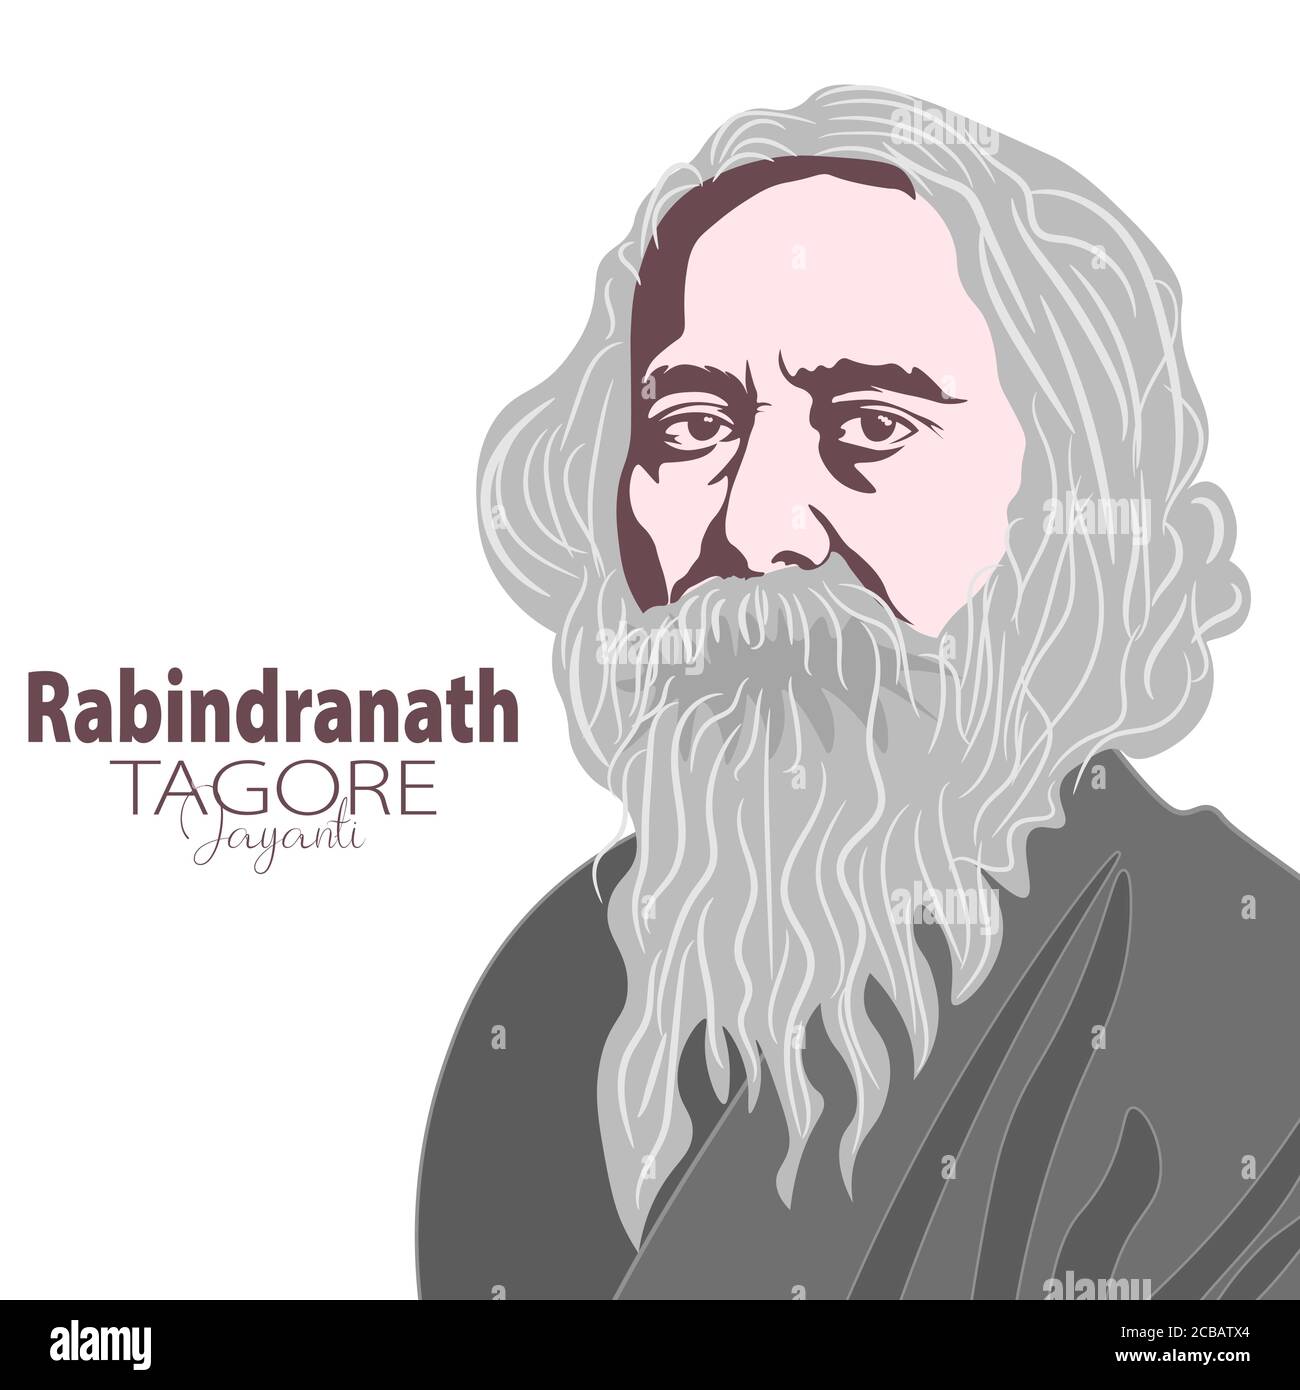 NPG 6697; Rabindranath Tagore - Portrait - National Portrait Gallery